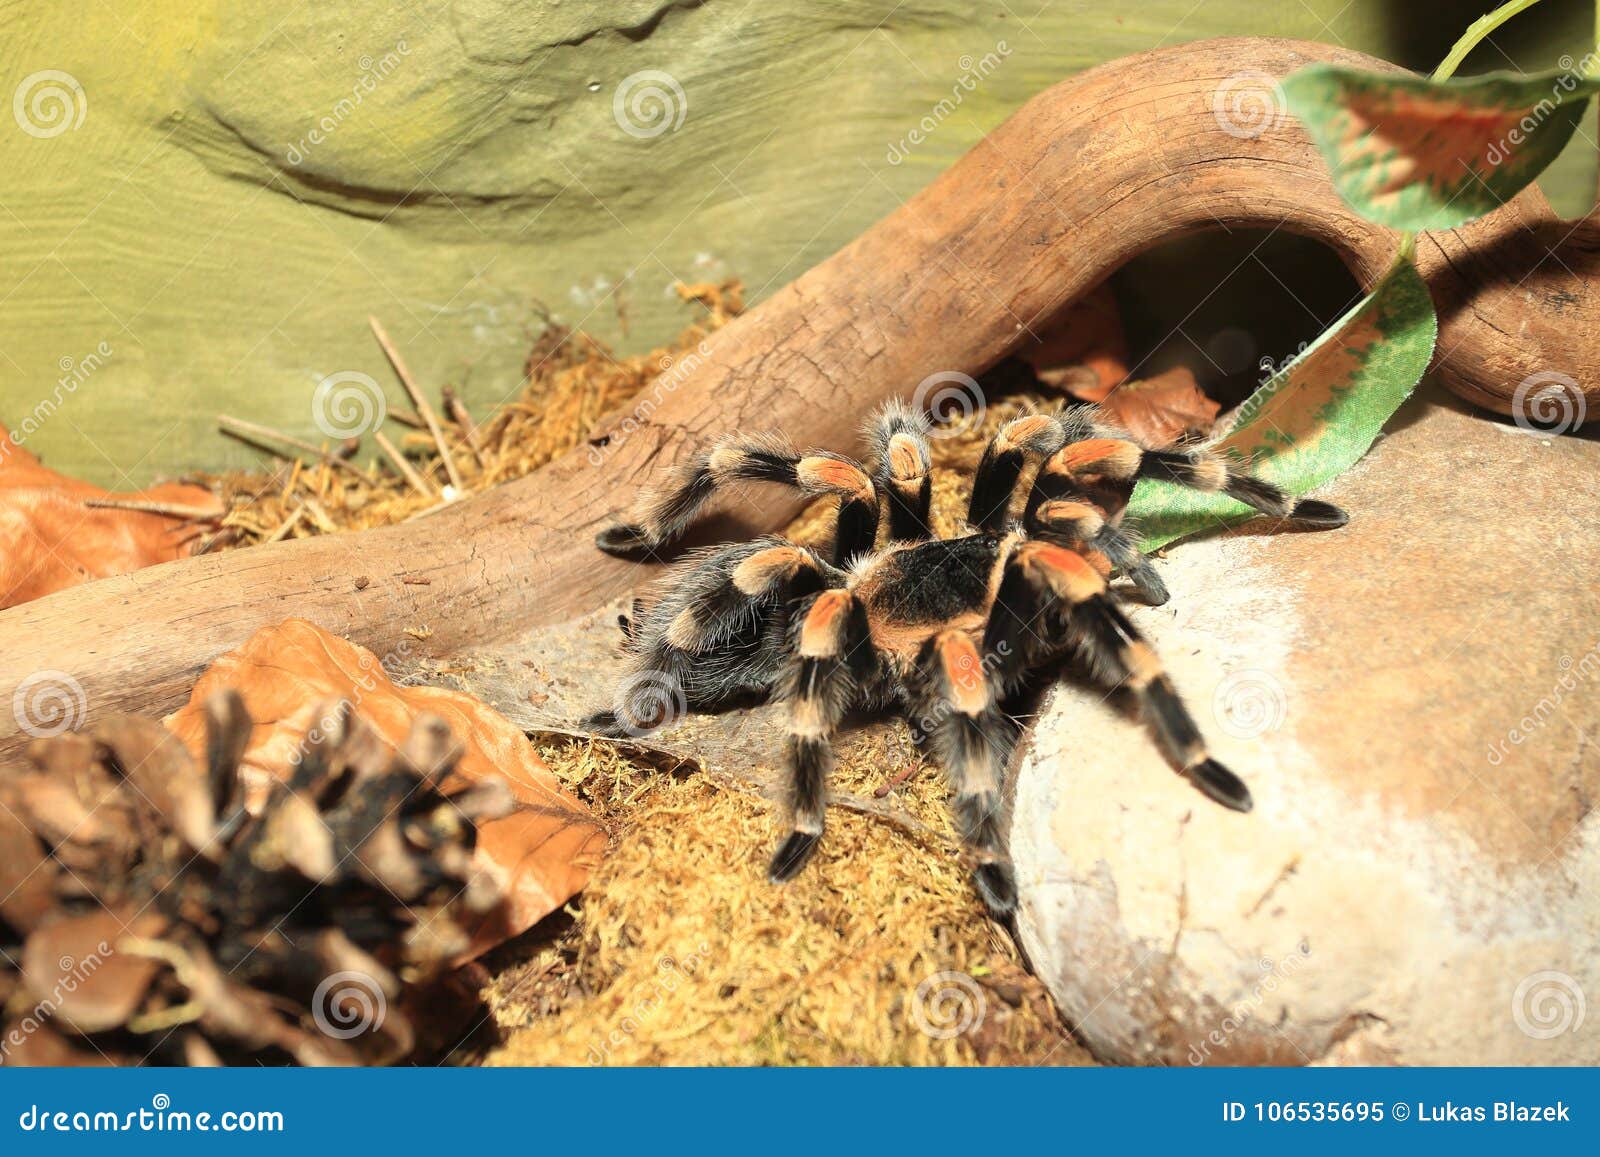 Mexican redknee tarantula stock image. Image of smithi - 106535695